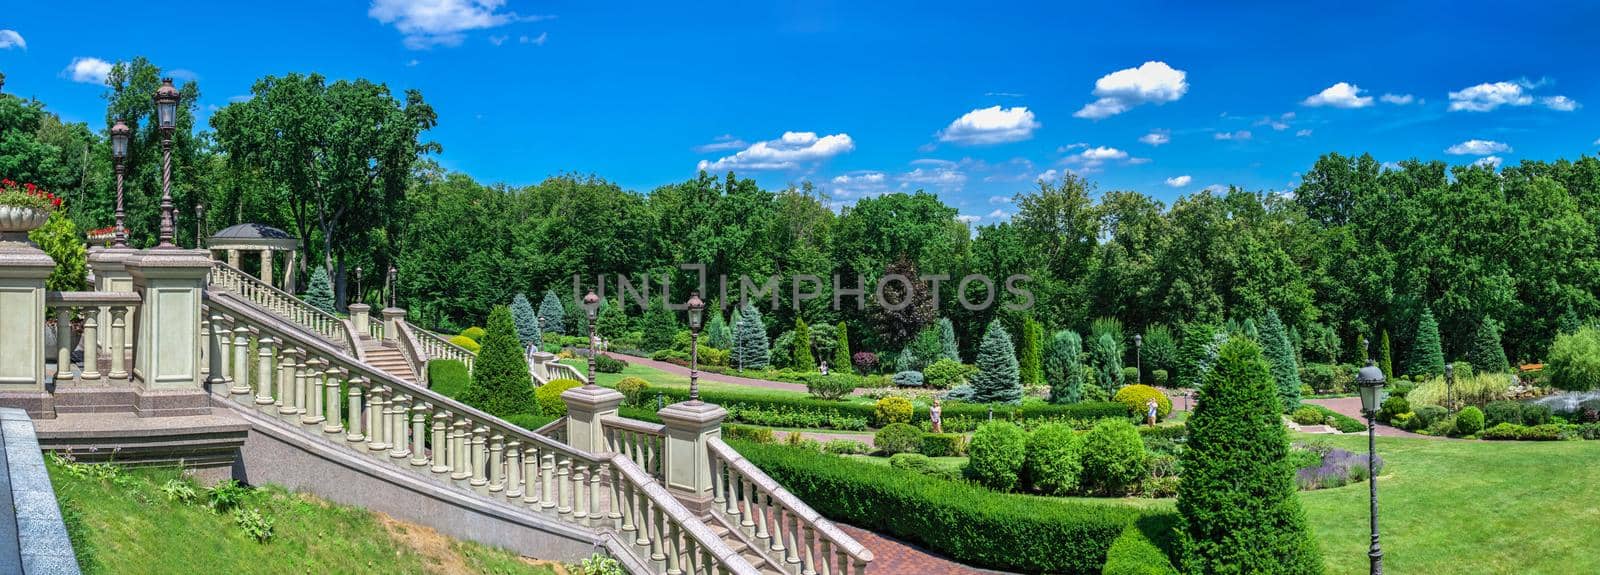 Kyiv, Ukraine 07.10.2020. Landscapes of the park in the Mezhyhirya Residence, Kyiv, Ukraine, on a sunny summer day